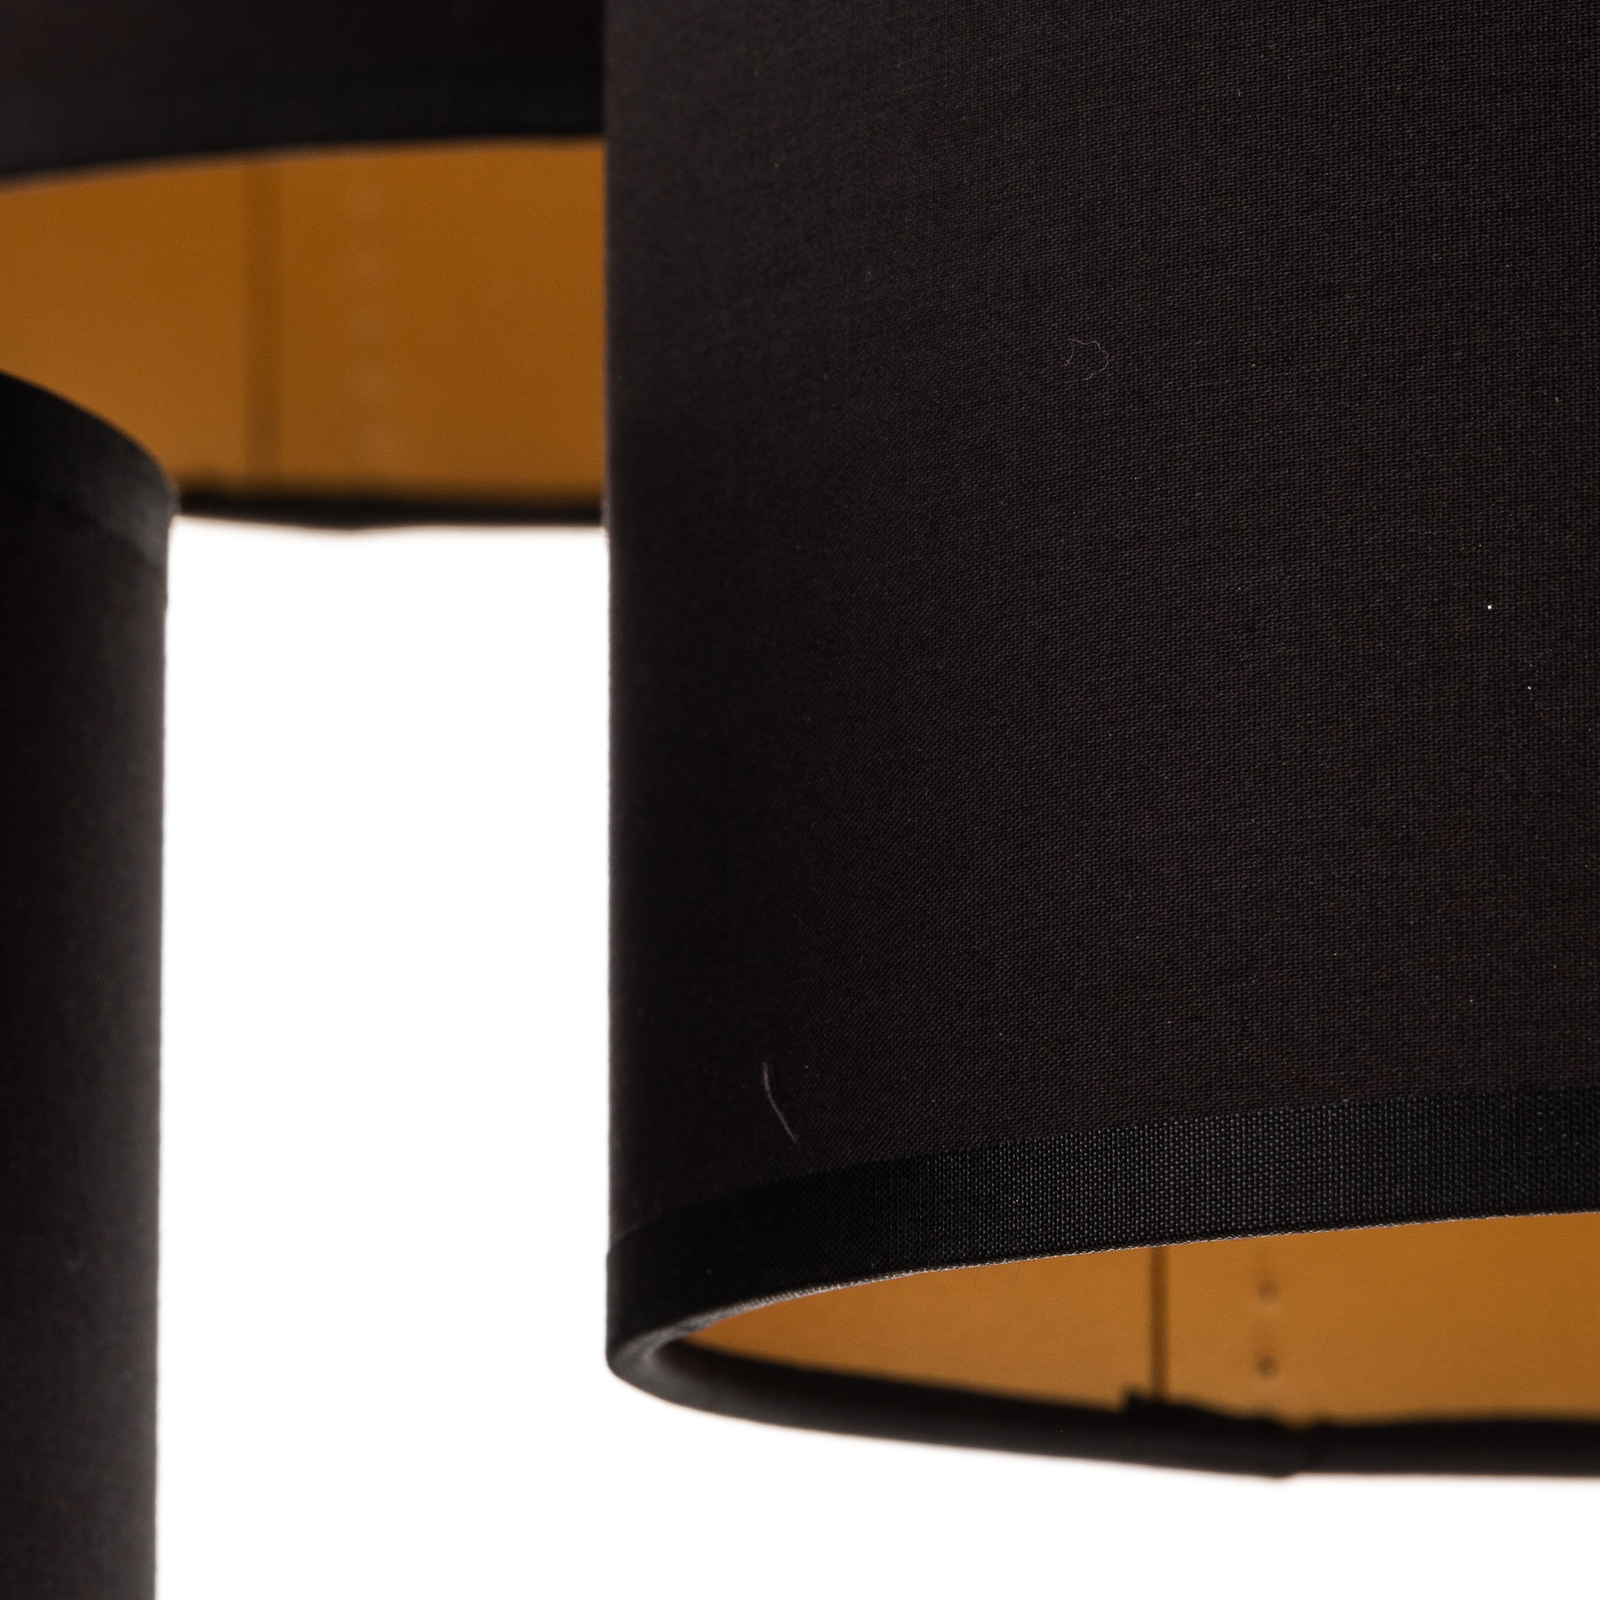 Hanglamp Soho, cilindervormig, rond 3-lamps blauw/goud